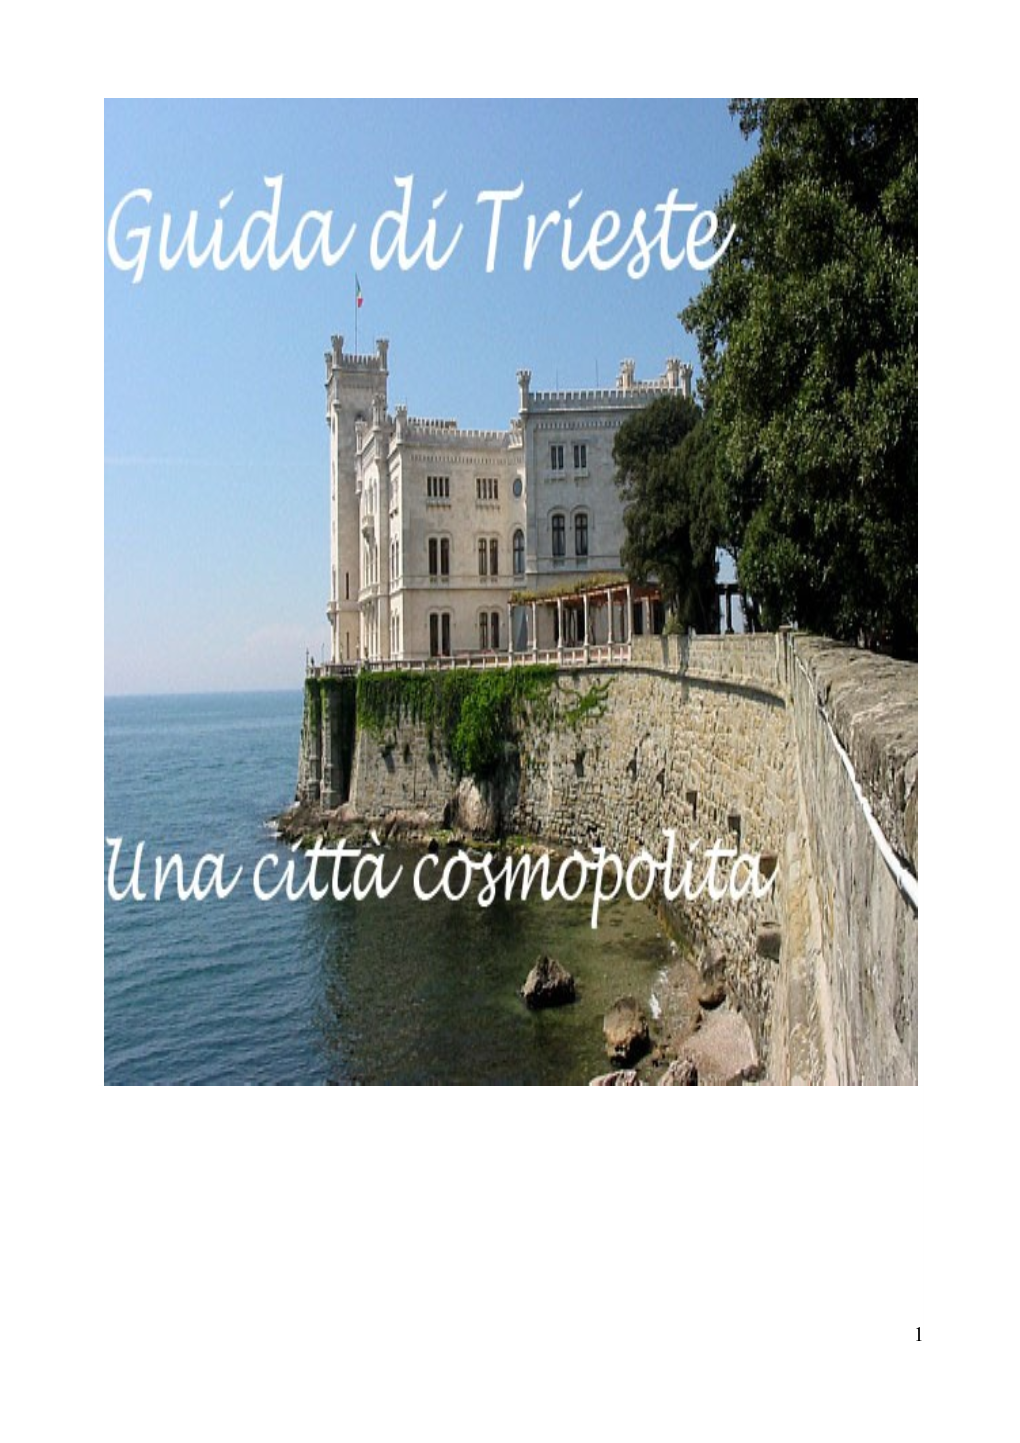 Trieste Short History of Trieste